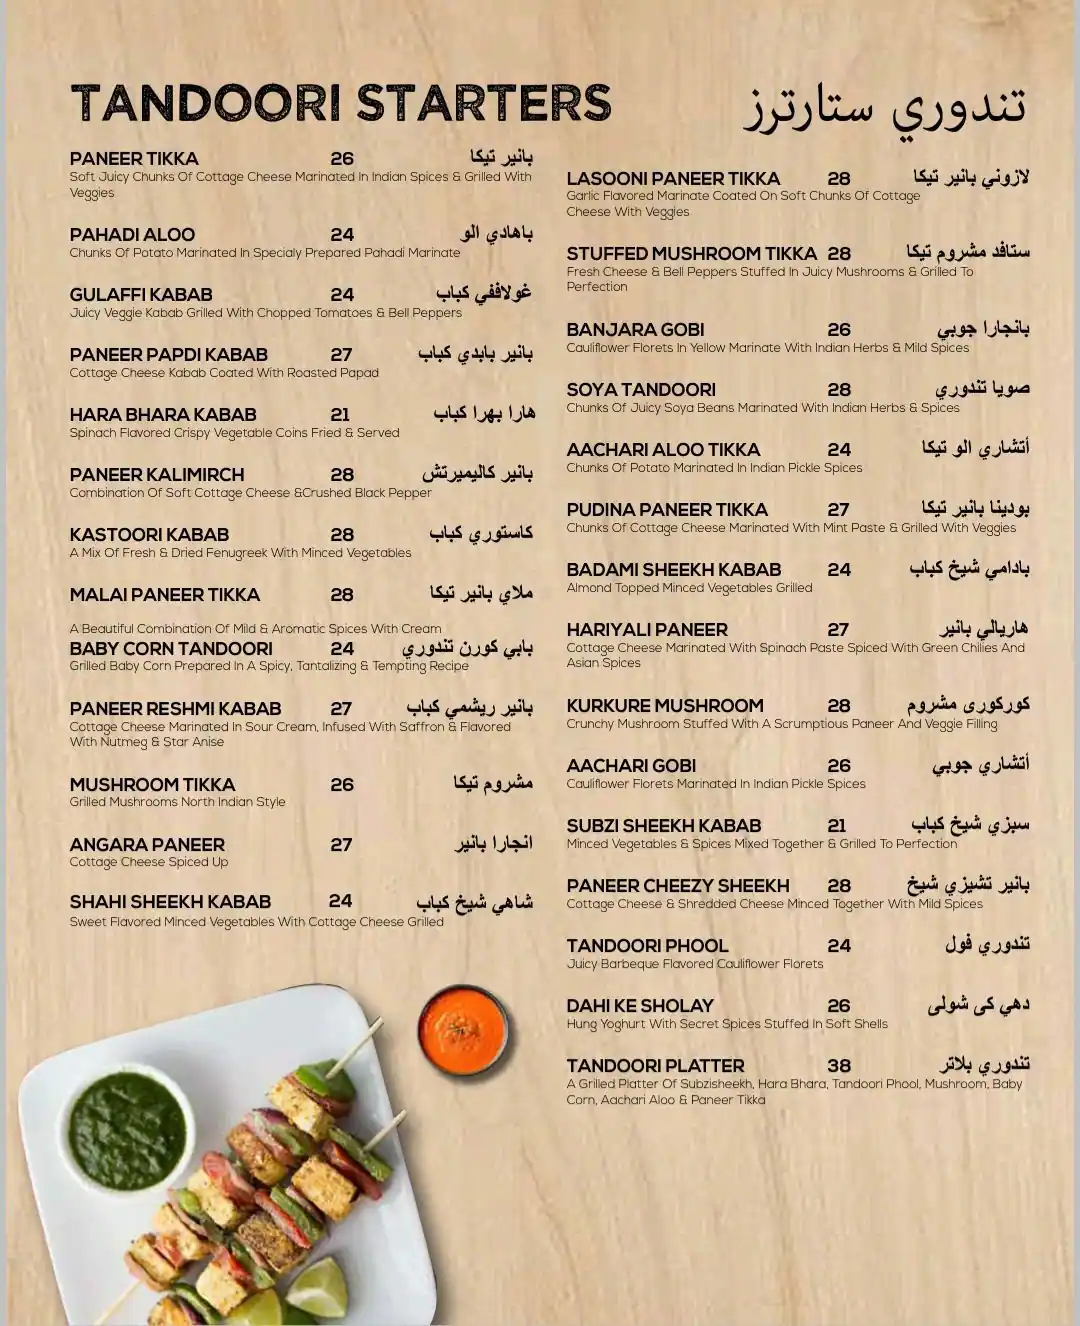 Best restaurant menu near Discovery Gardens Dubai